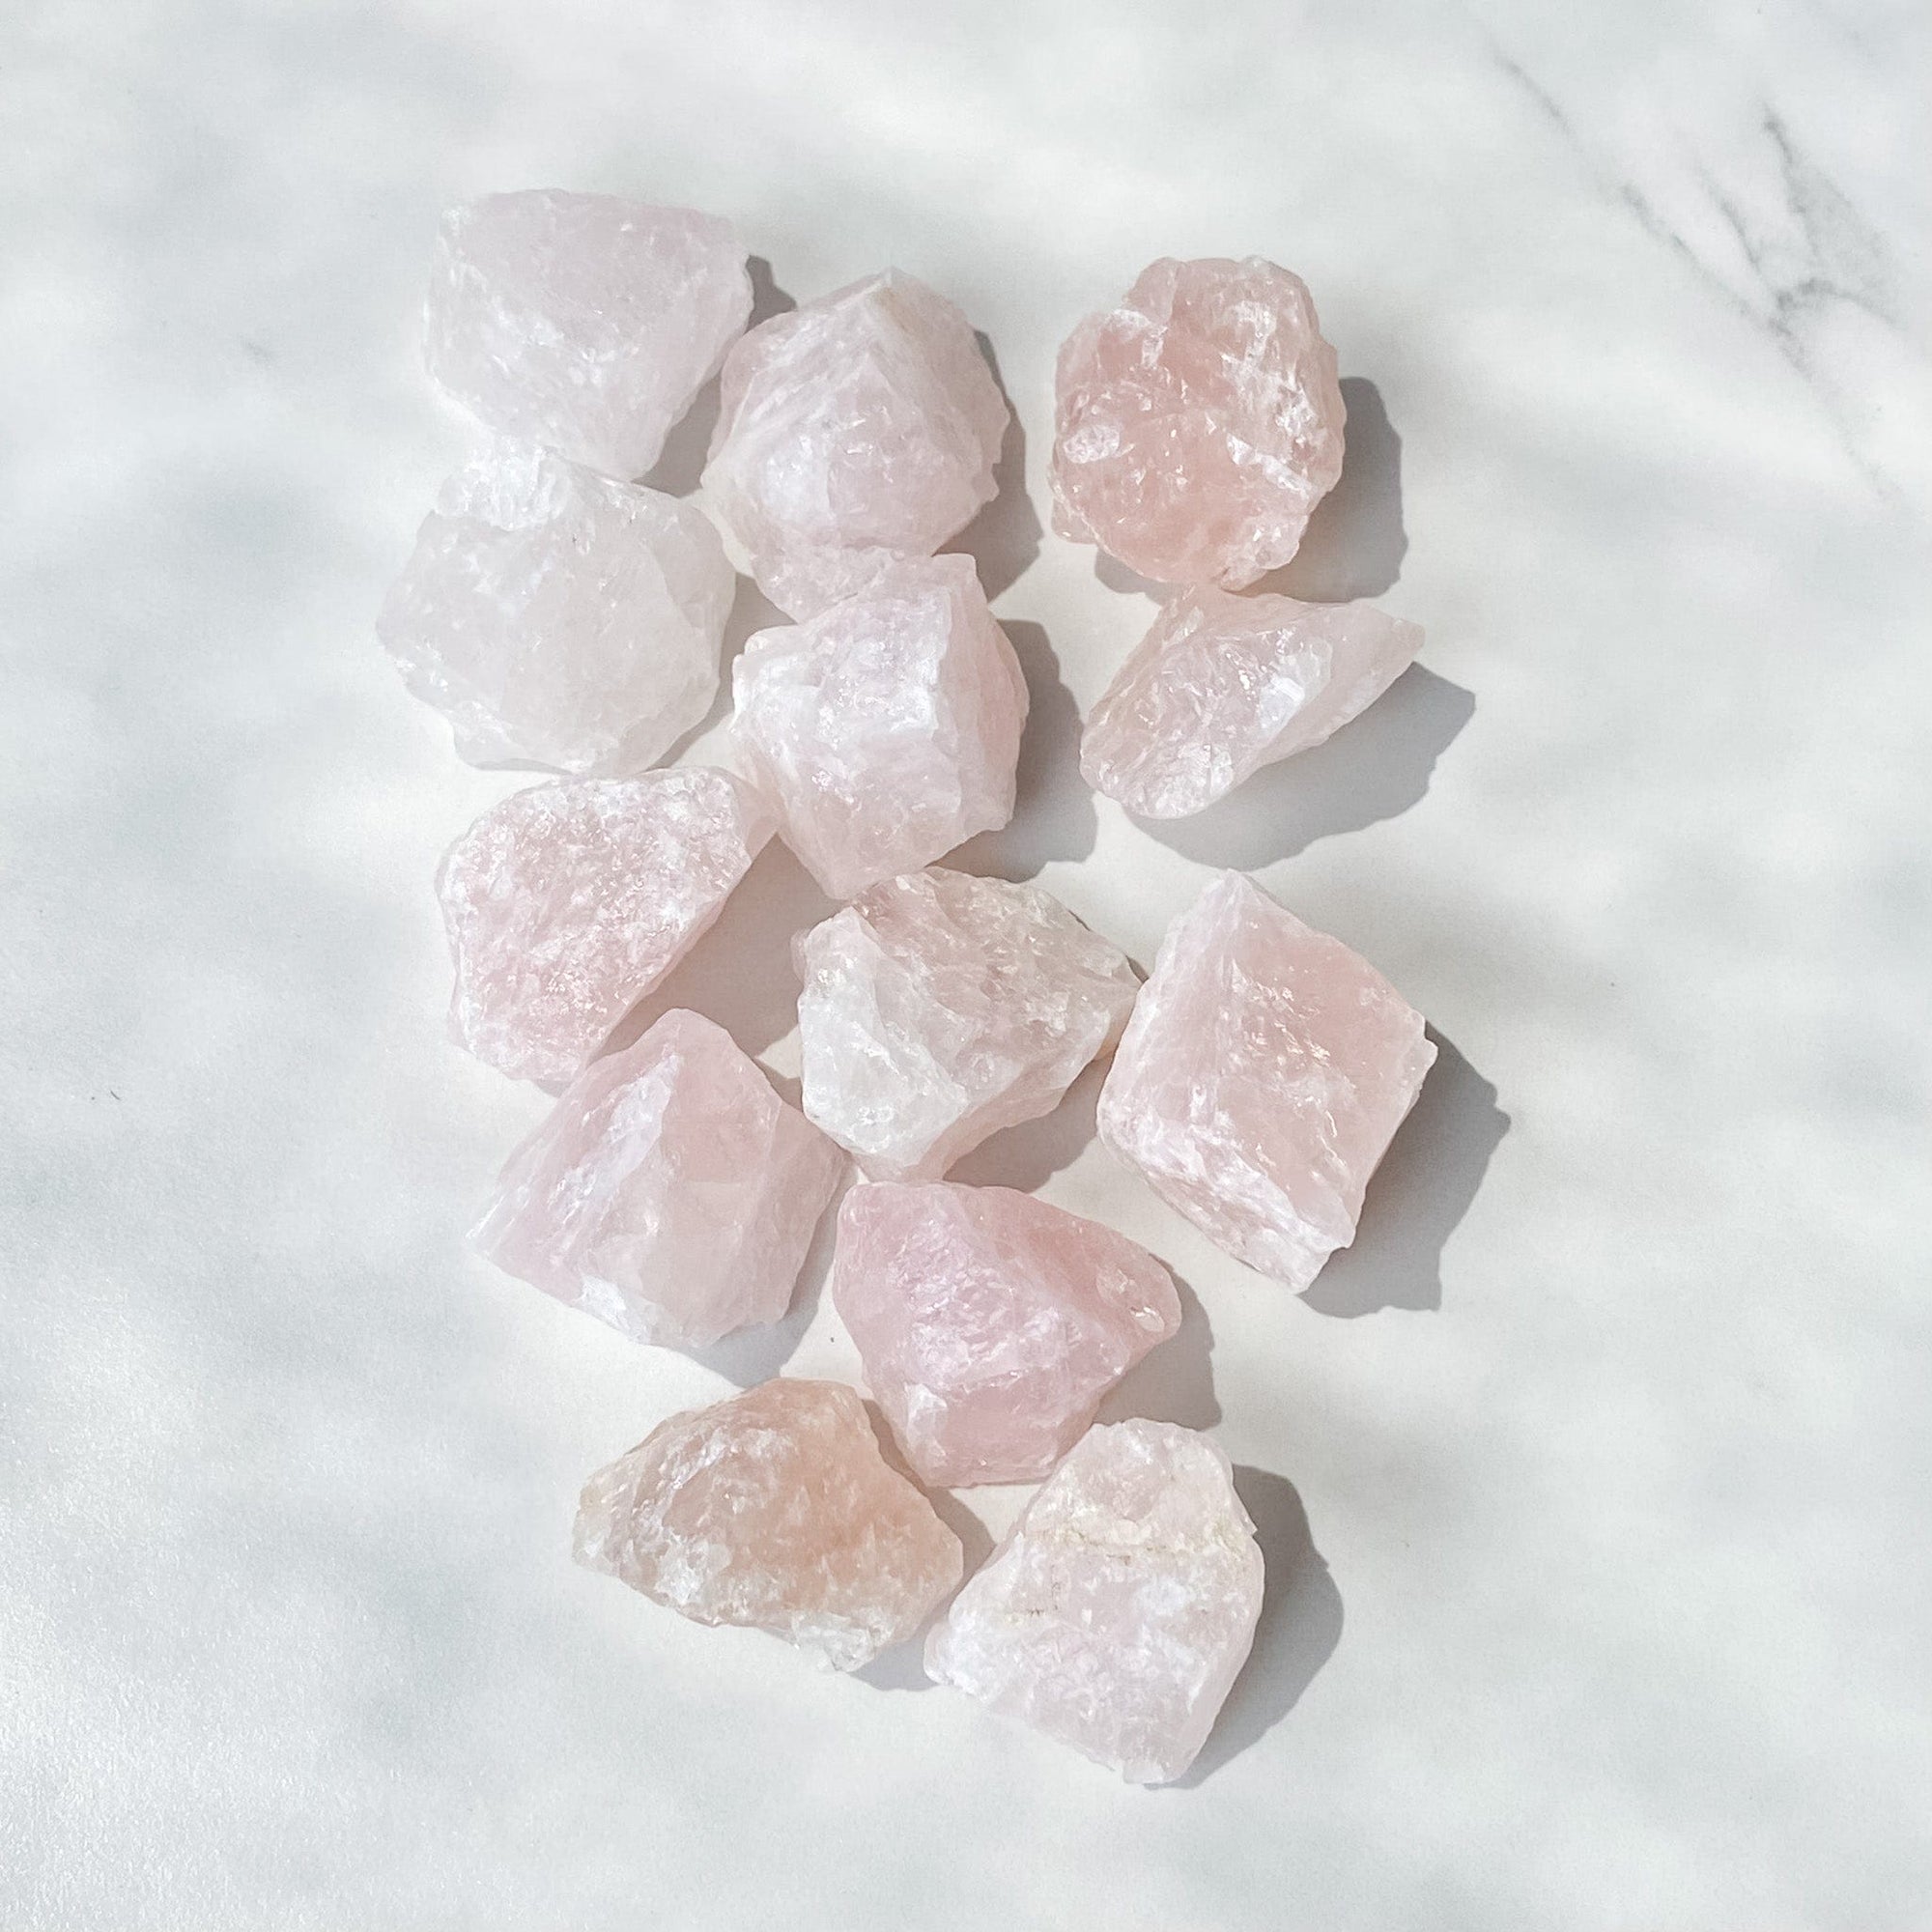 s1572 natural rose quartz crystal raw rough 4cm chunk stone australia. rose quartz raw stones australia. gemrox sydney 1